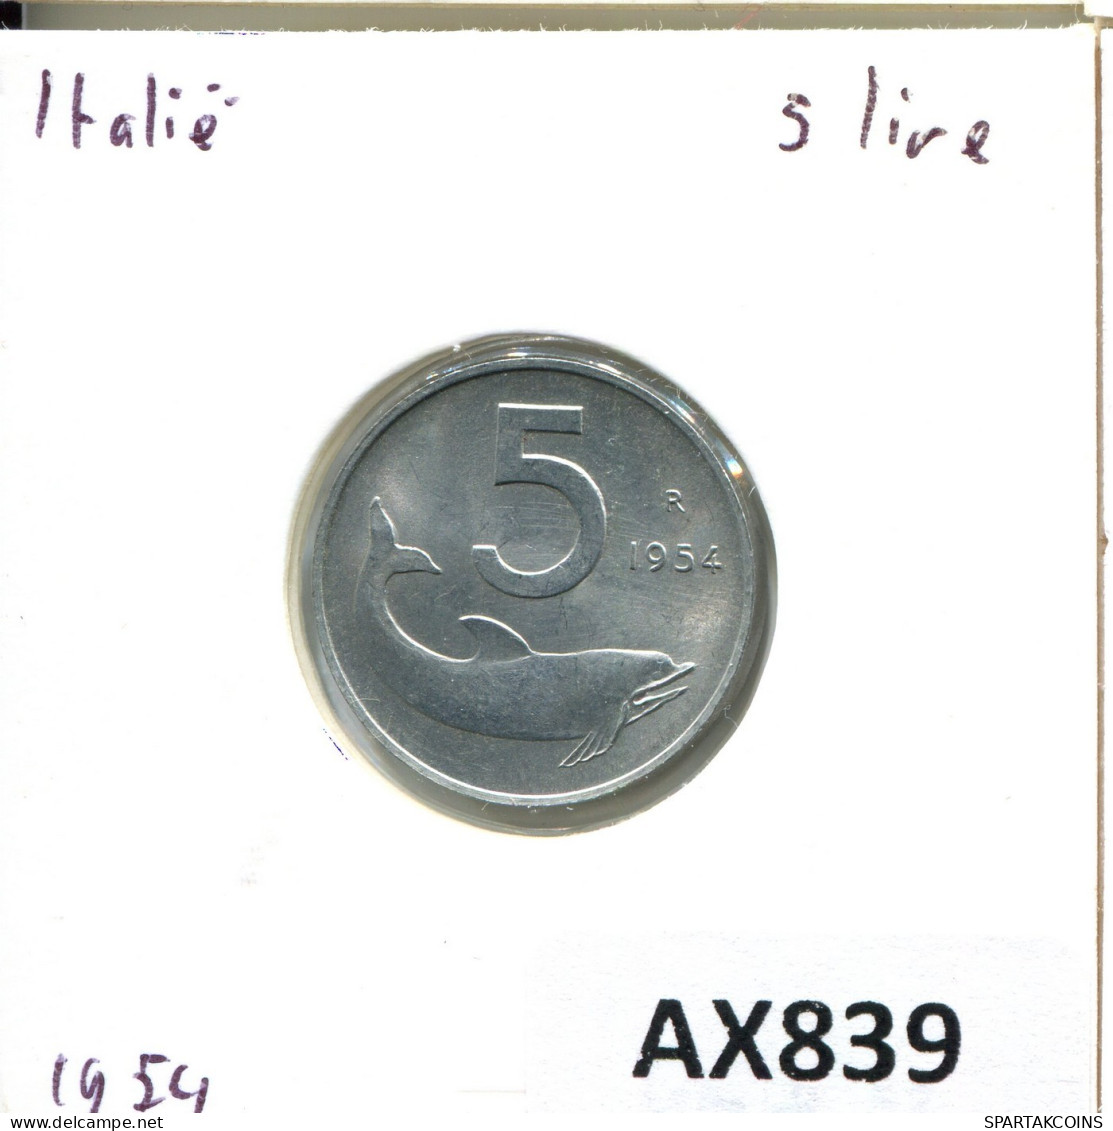 5 LIRE 1954 ITALY Coin #AX839.U.A - 5 Liras